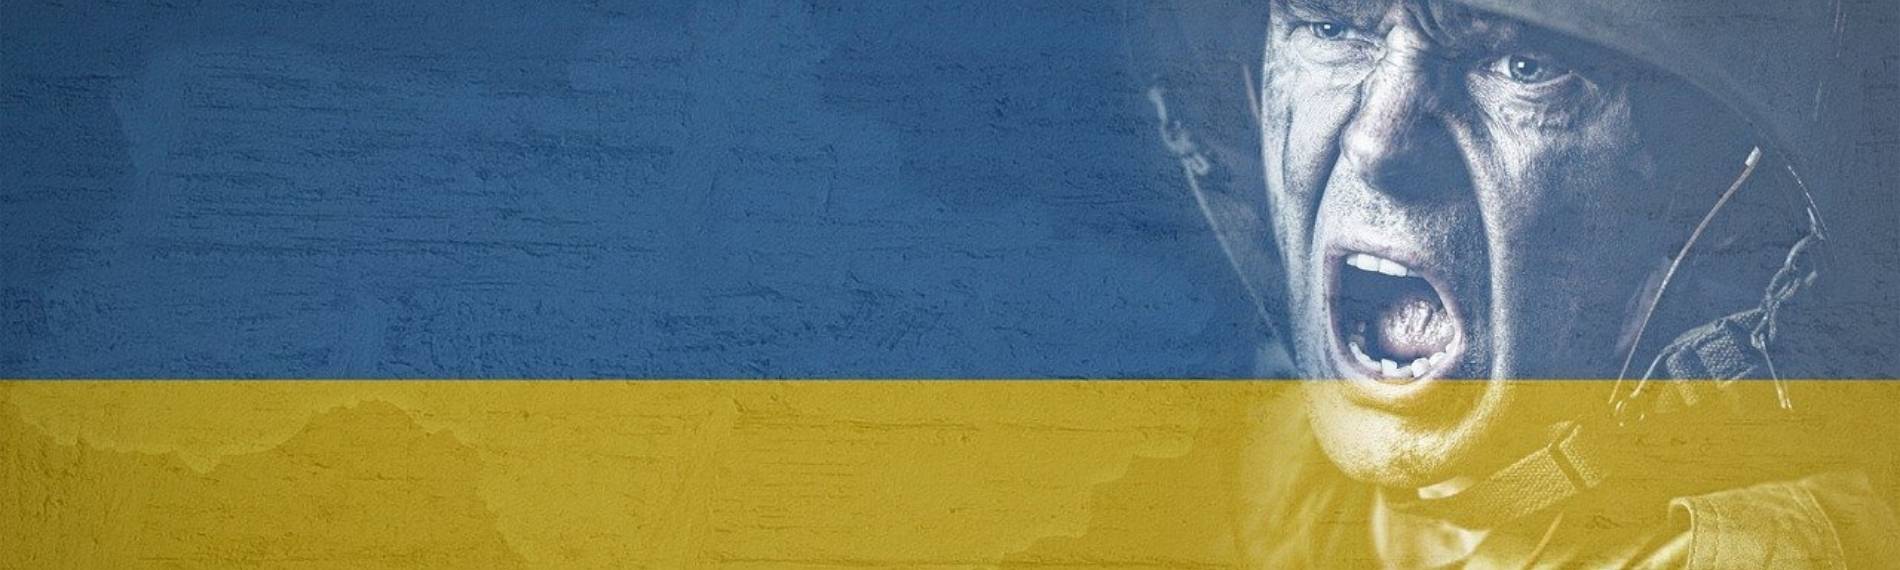 Ukrainischer Soldat verzweifelt vor ukrainischer Flagge